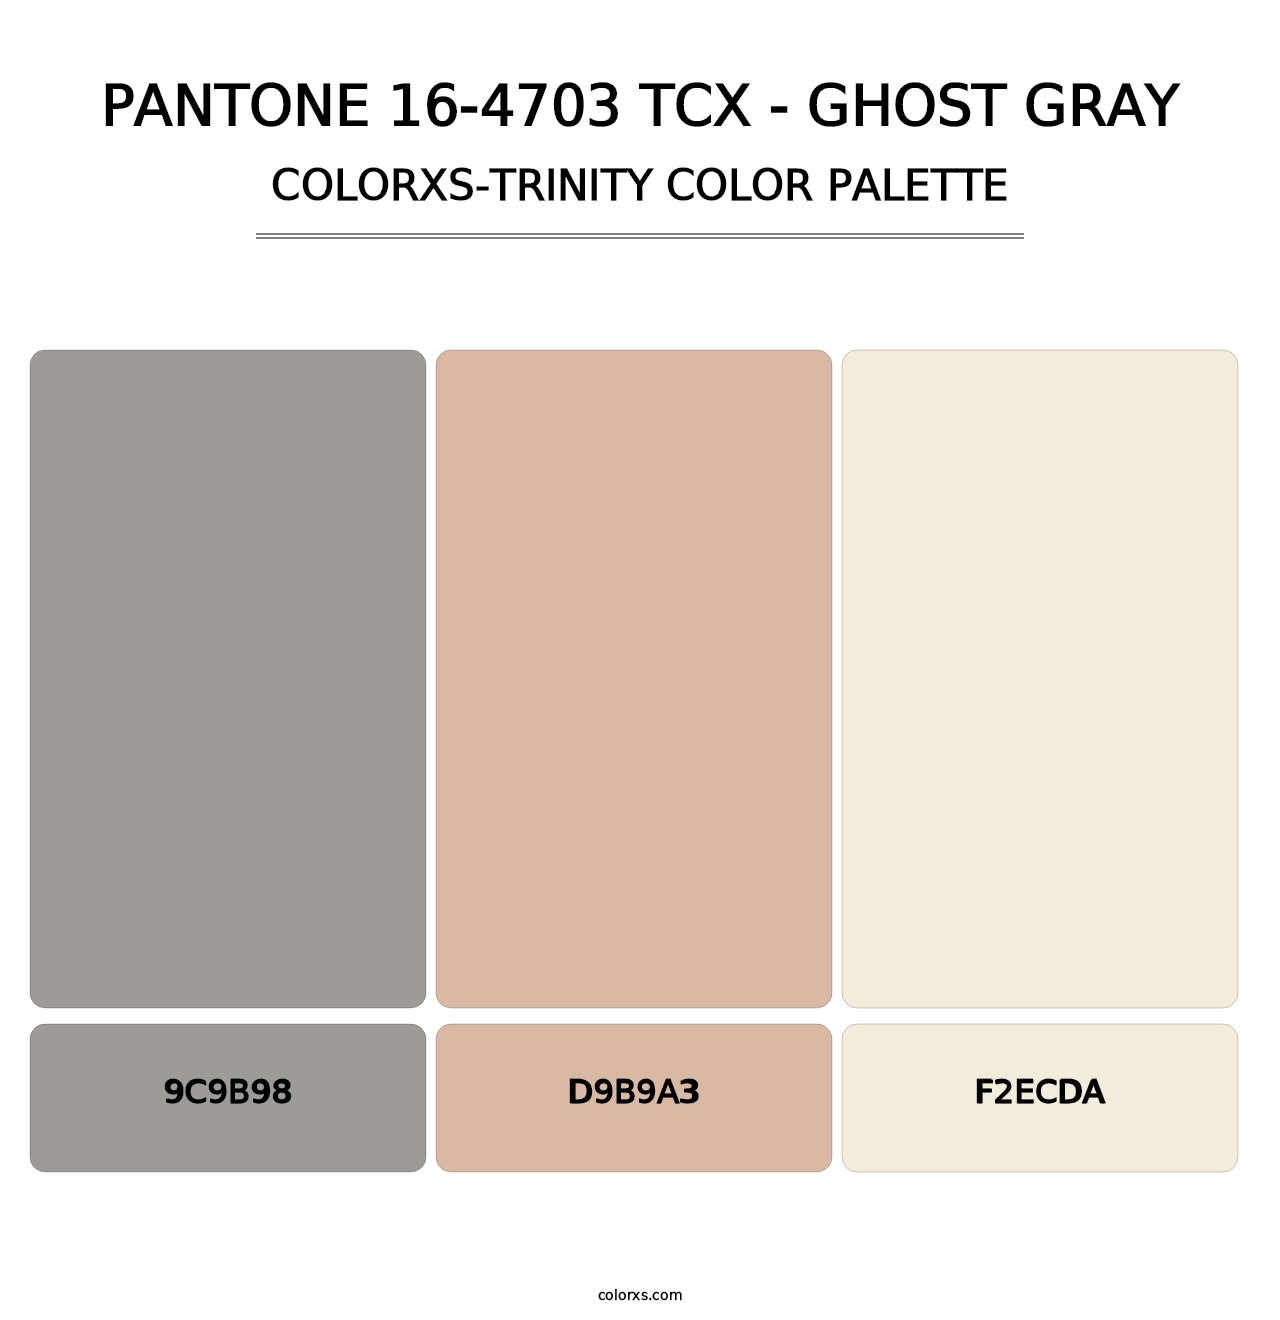 PANTONE 16-4703 TCX - Ghost Gray - Colorxs Trinity Palette